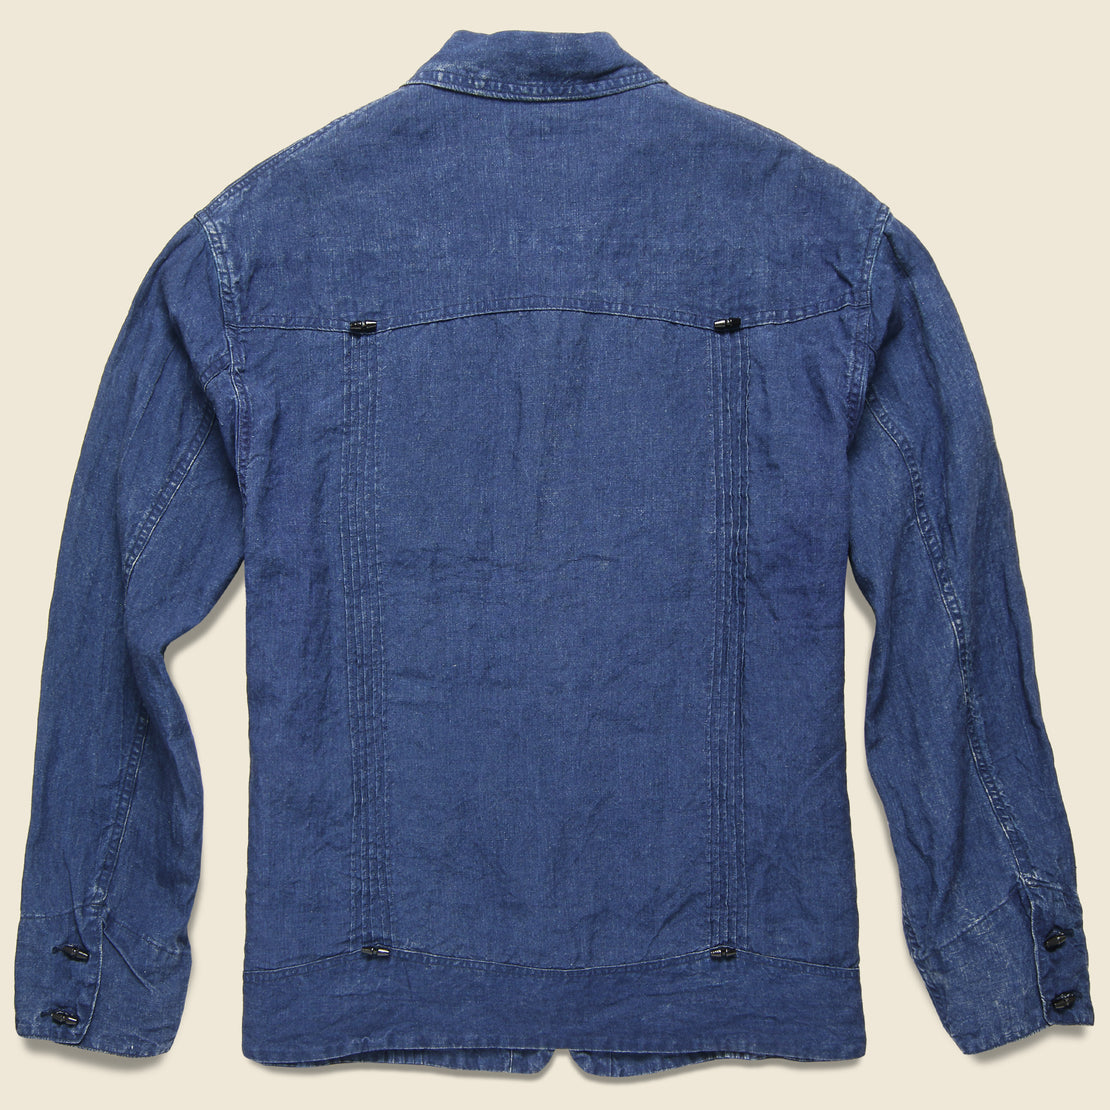 Linen Cuba Shirt Jacket - Indigo - Kapital - STAG Provisions - Outerwear - Shirt Jacket